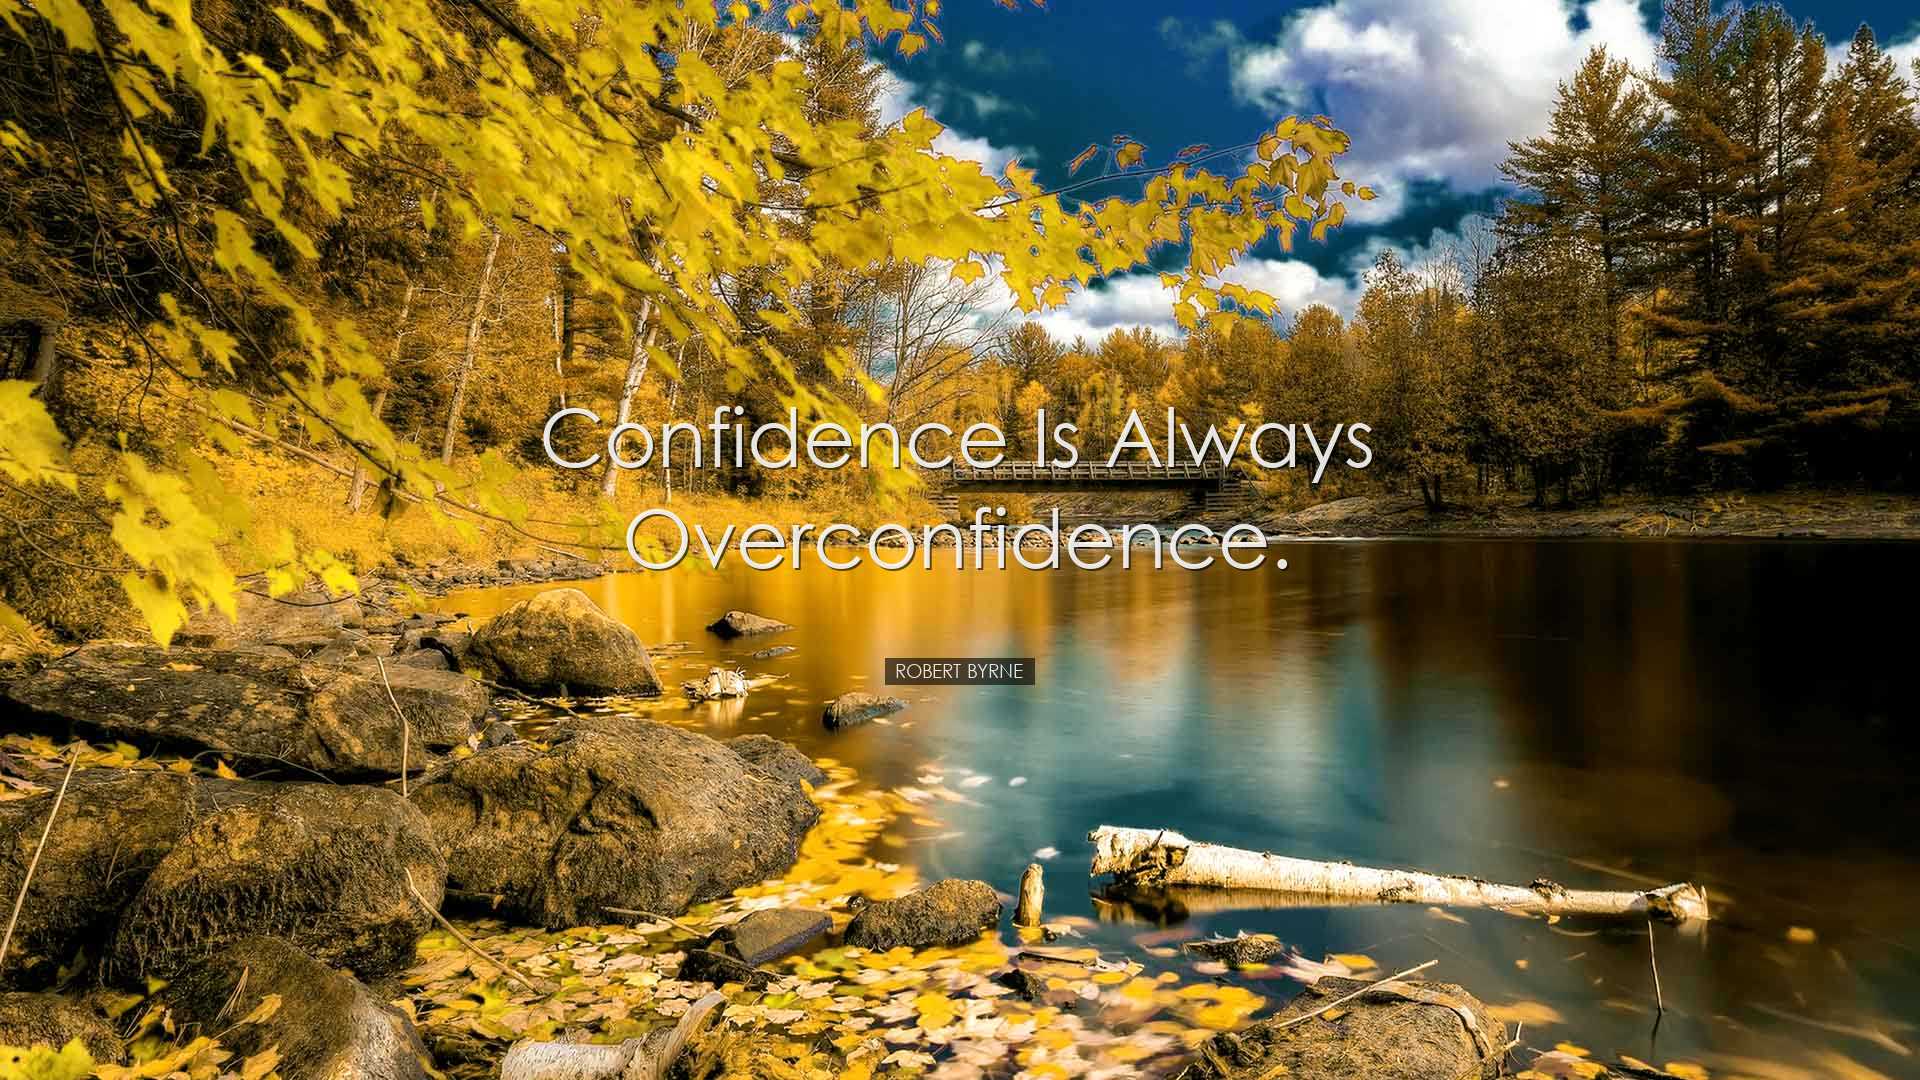 Confidence is always overconfidence. - Robert Byrne